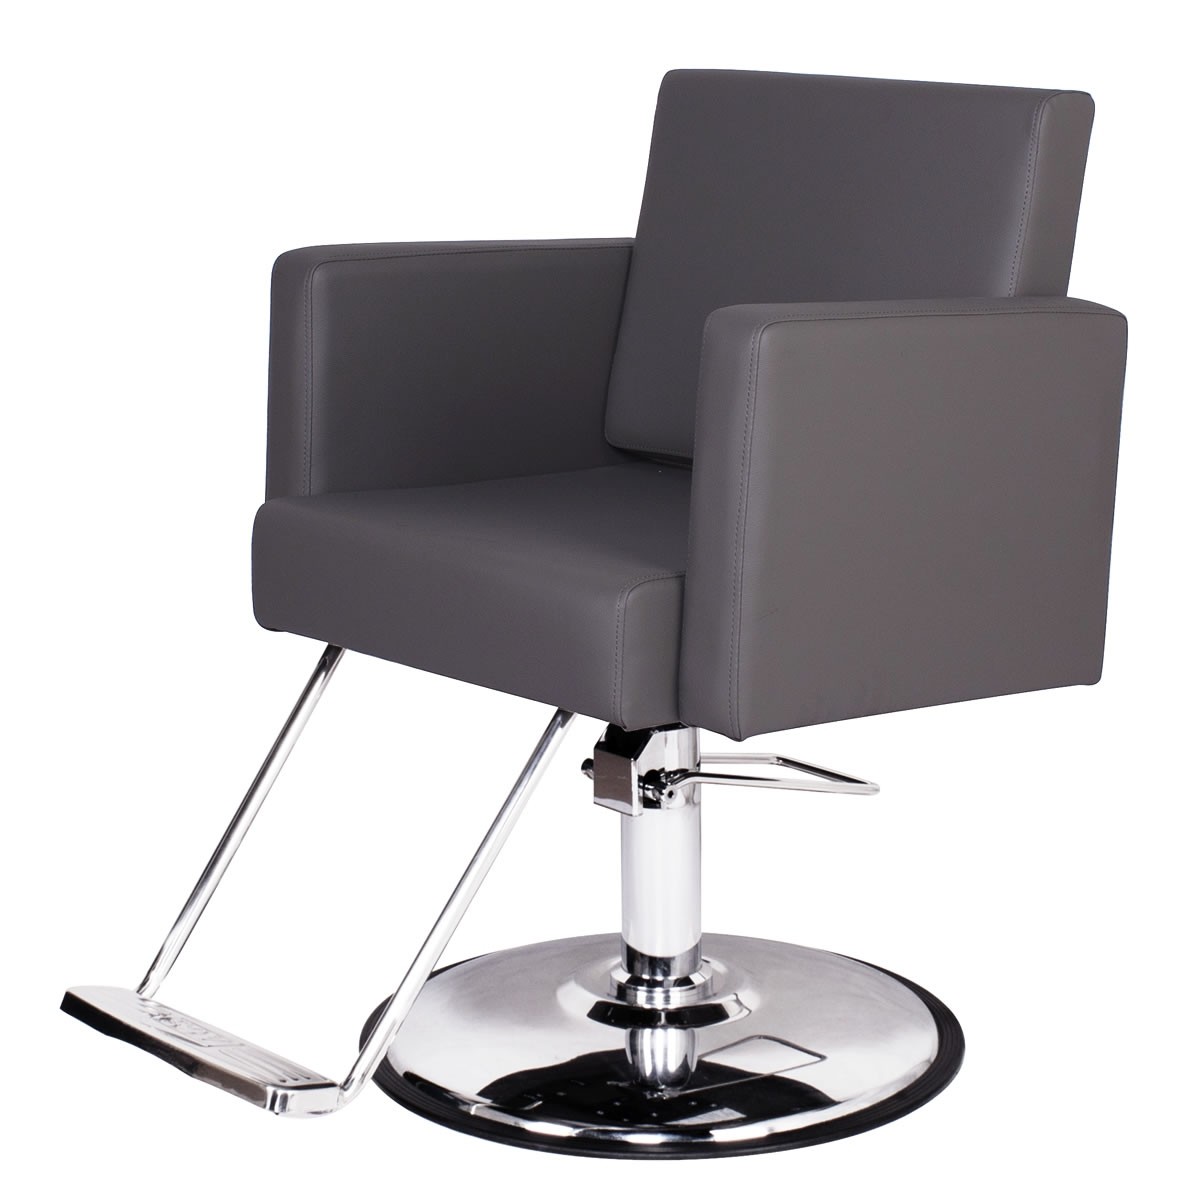 "CANON" Salon Styling Chair - Salon Chairs, Styling Chairs, Salon